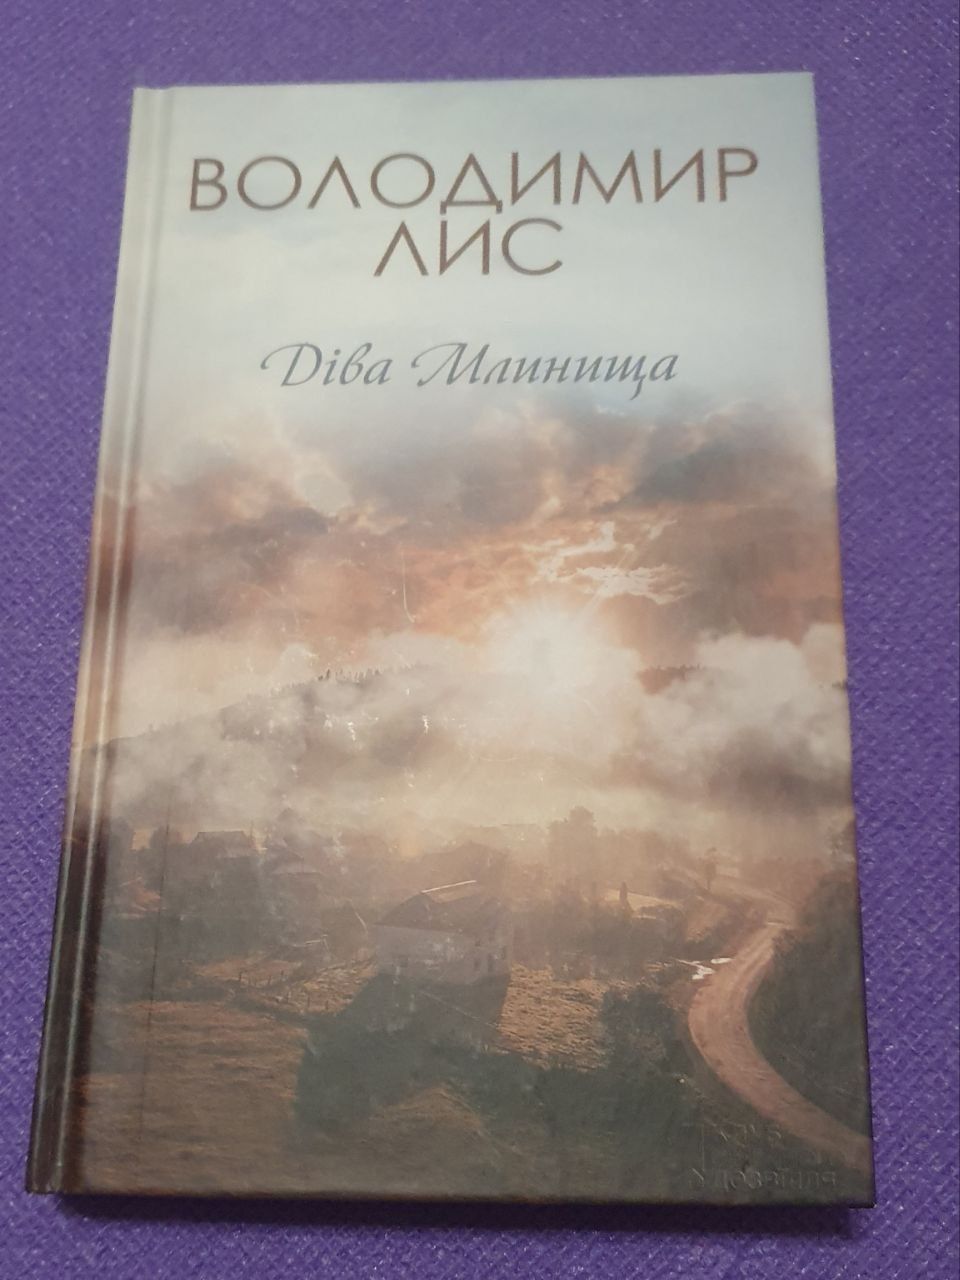 Книга Володимира Лис, Діва Млинища